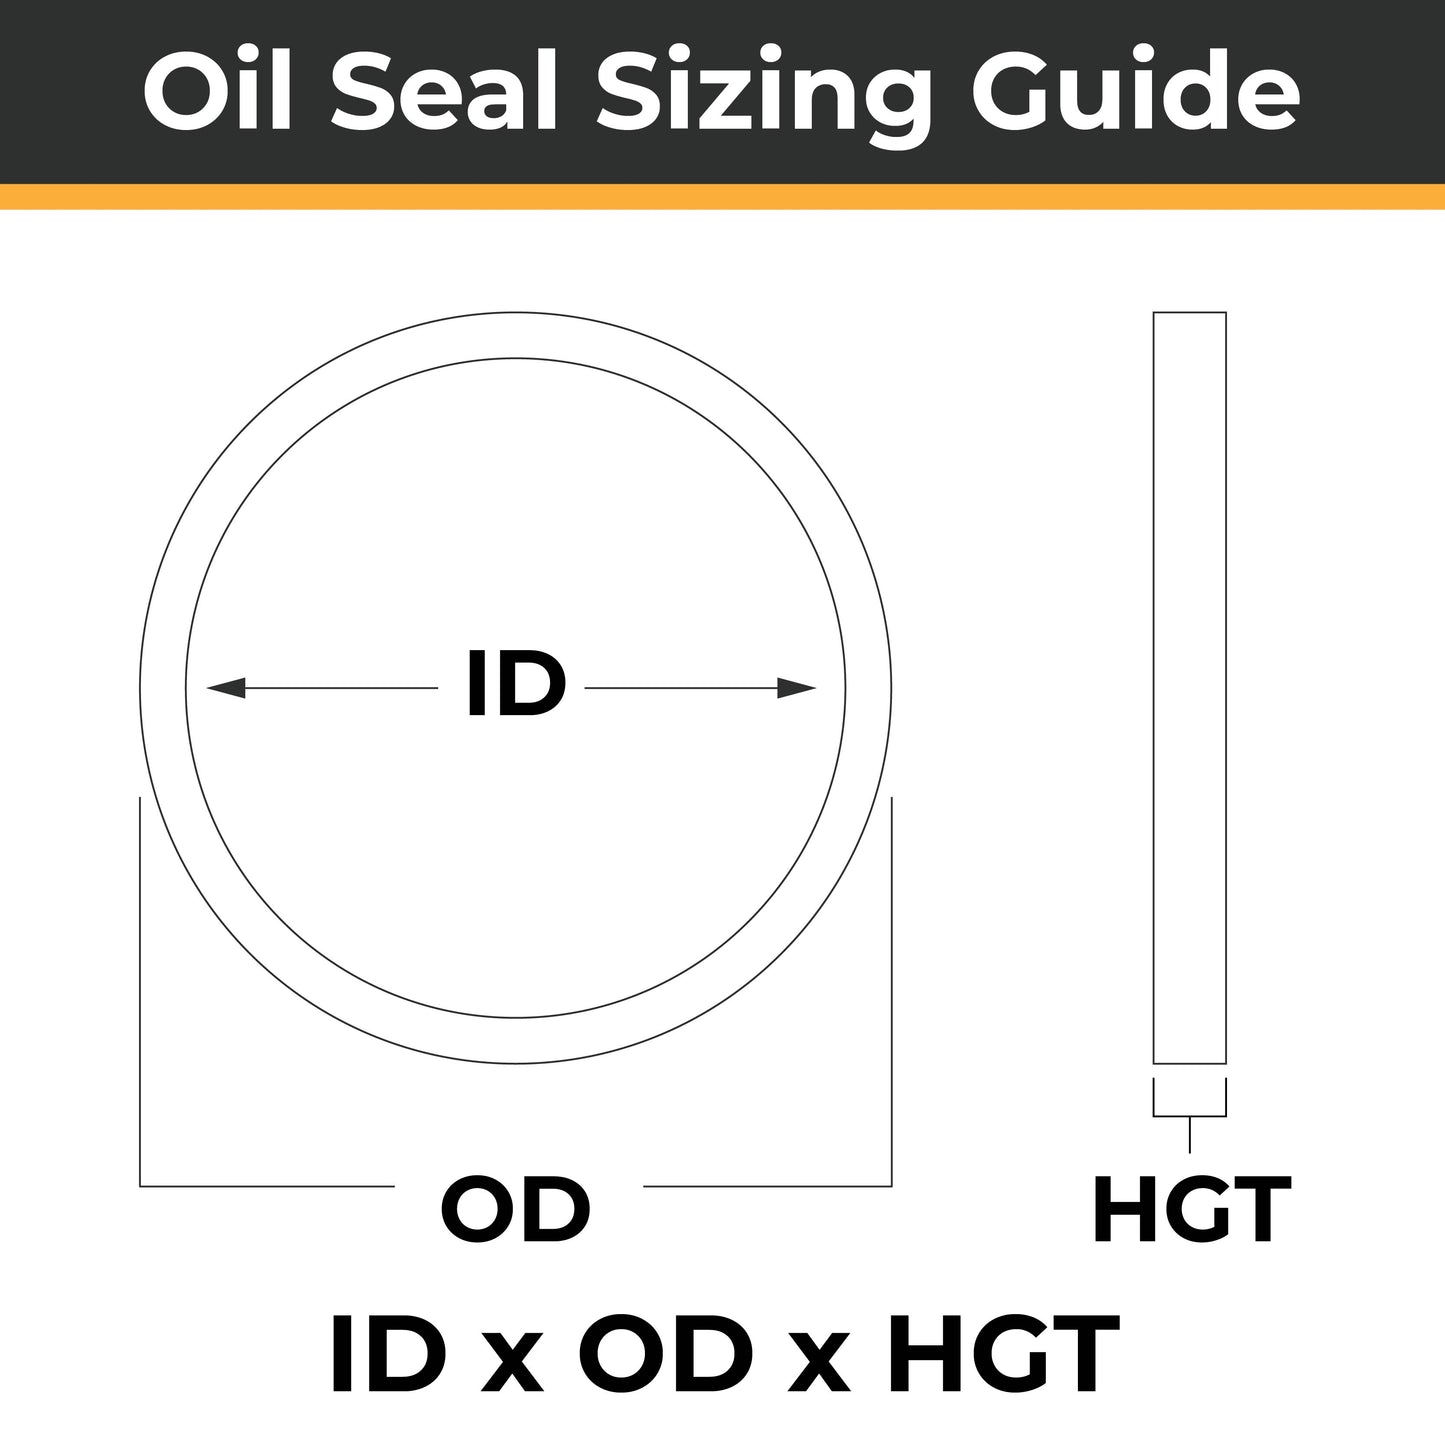 100mm x 120mm x 12mm - R23 (TC) Oil Seal - Totally Seals®